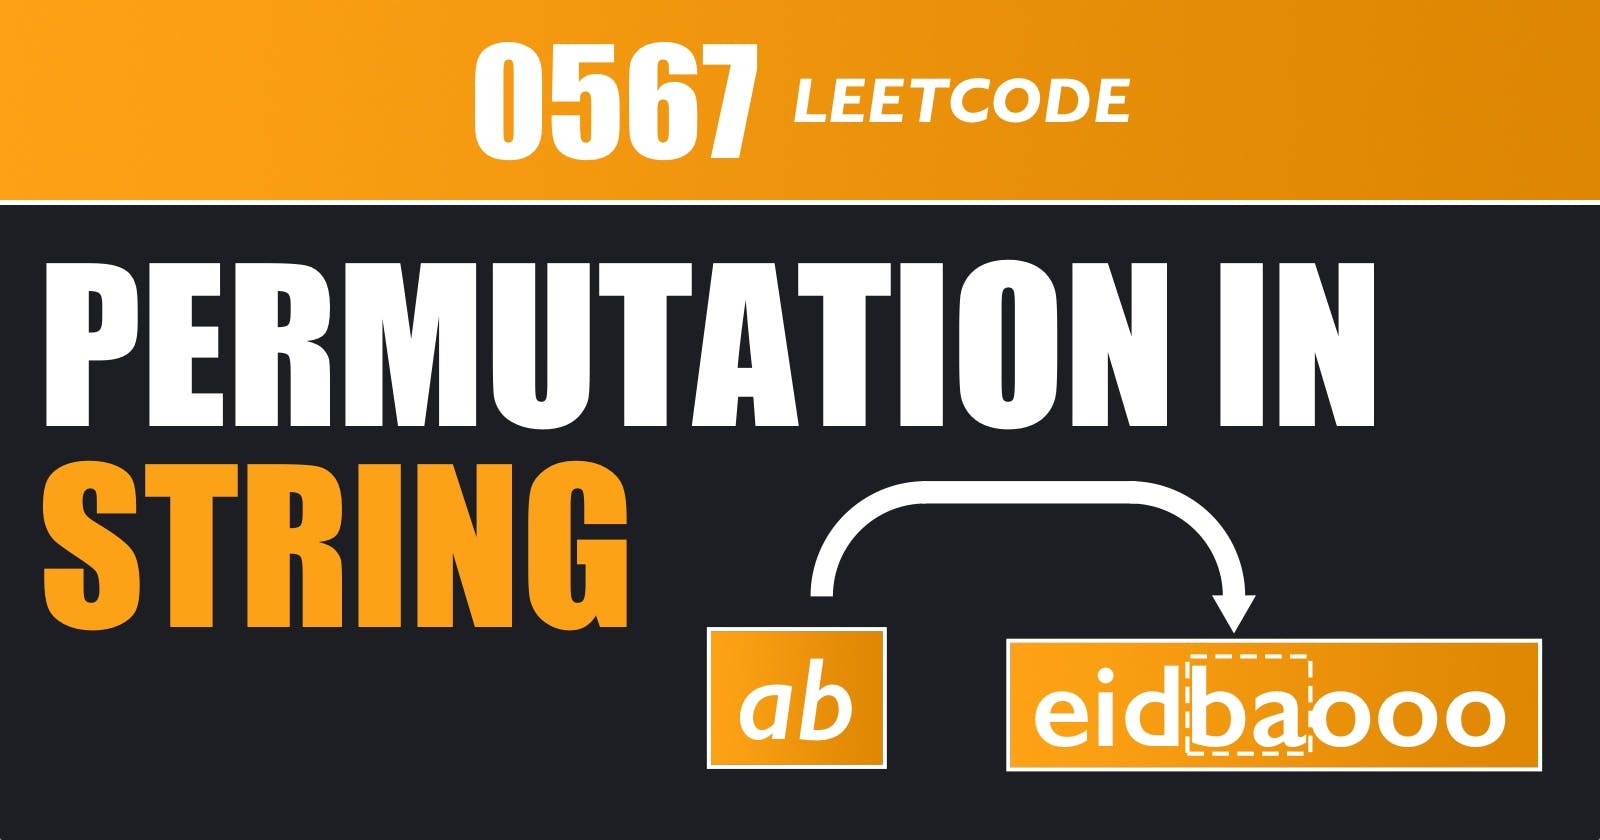 Permutation in String - Leetcode 567